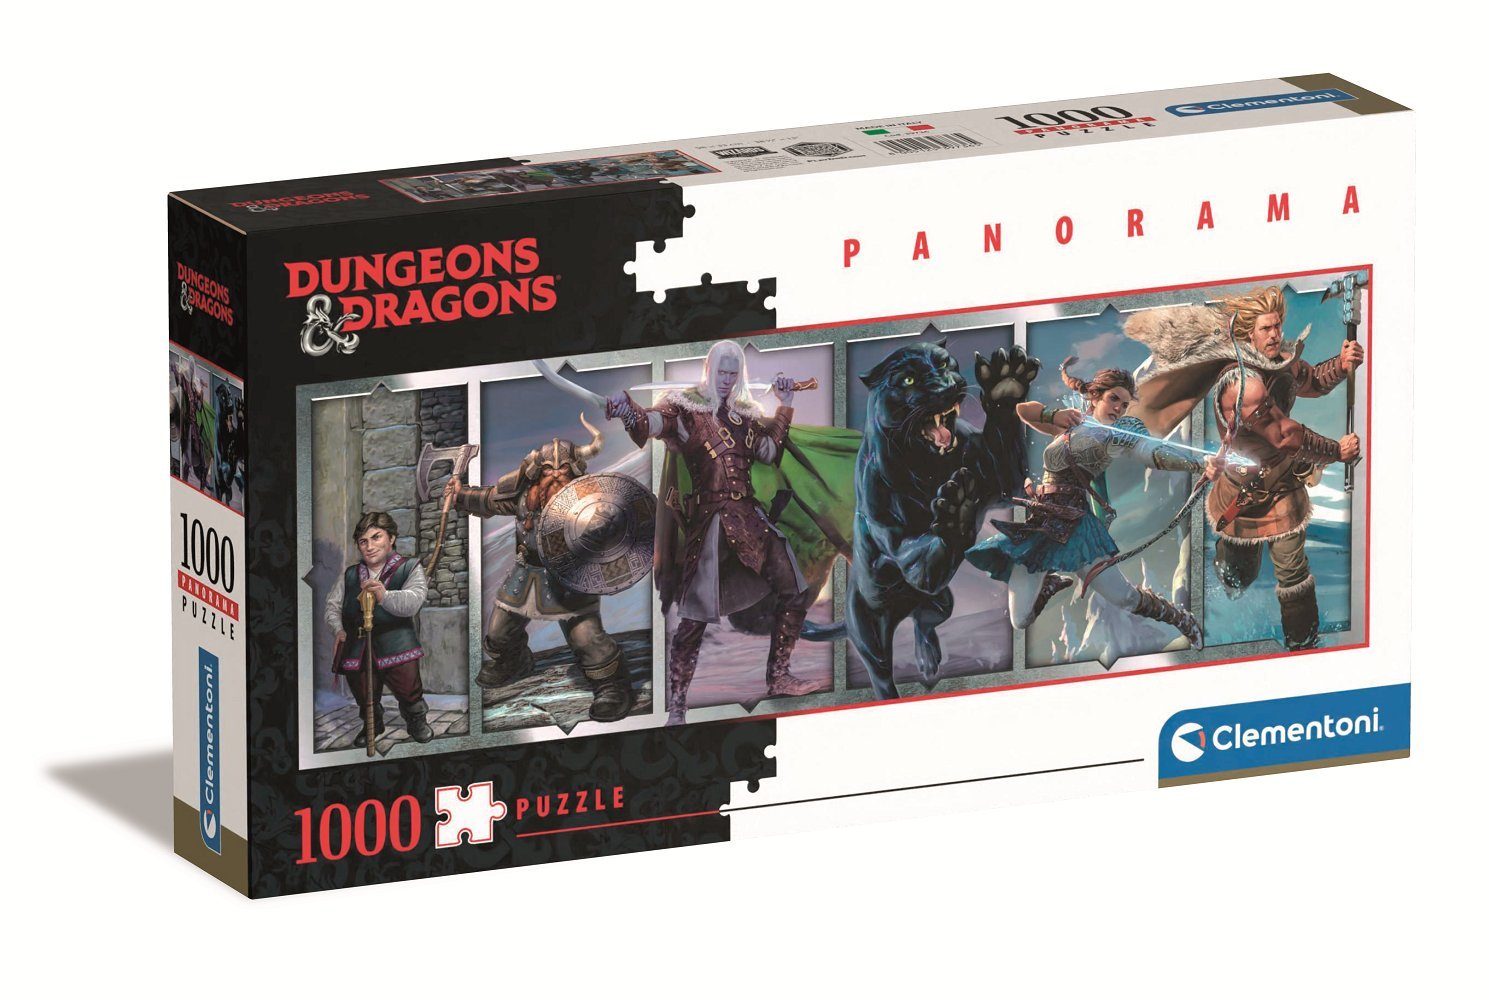 Clementoni® Dragons & Puzzle, Puzzleteile 1000 39736 Puzzle Panorama IIII Dungeons